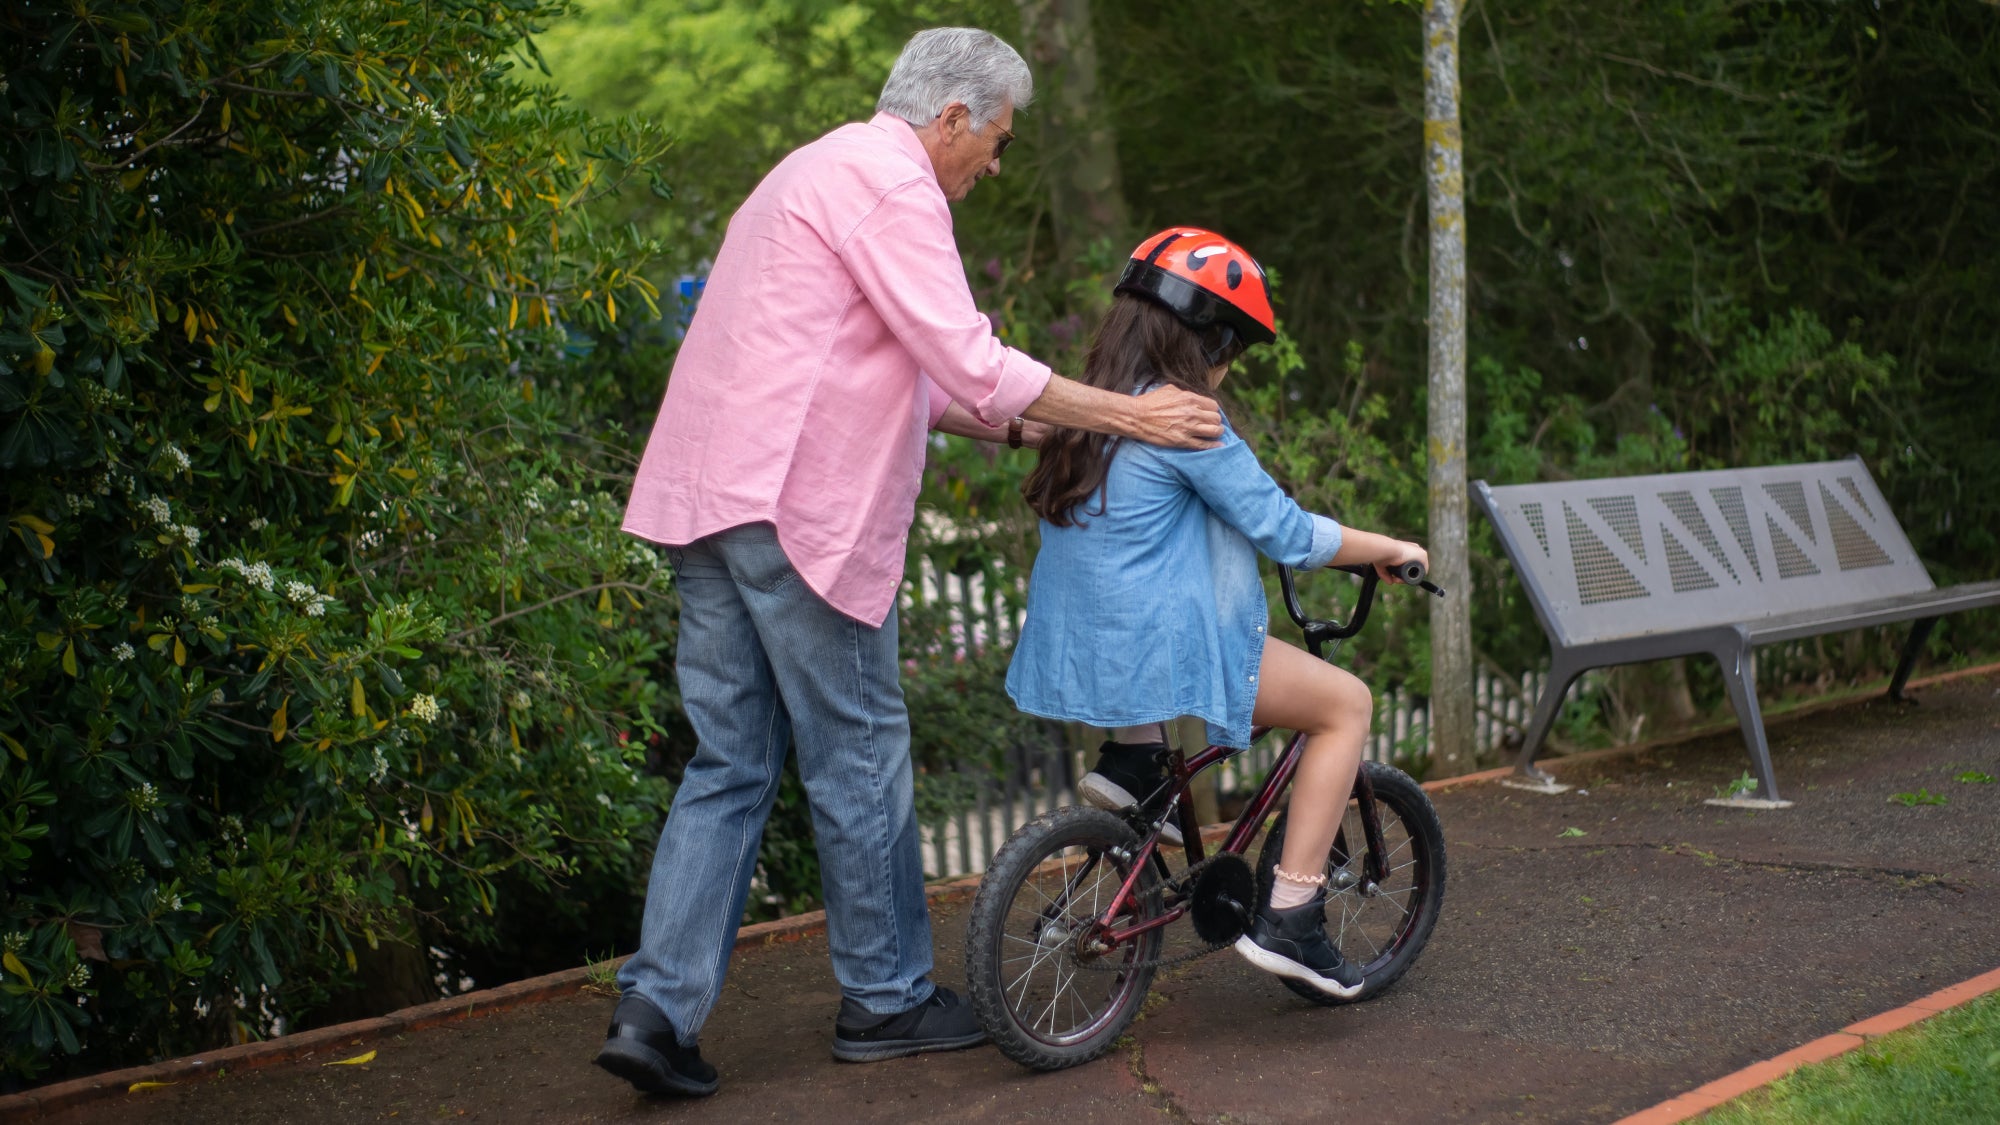 Cómo enseñar a un niño a andar en bicicleta